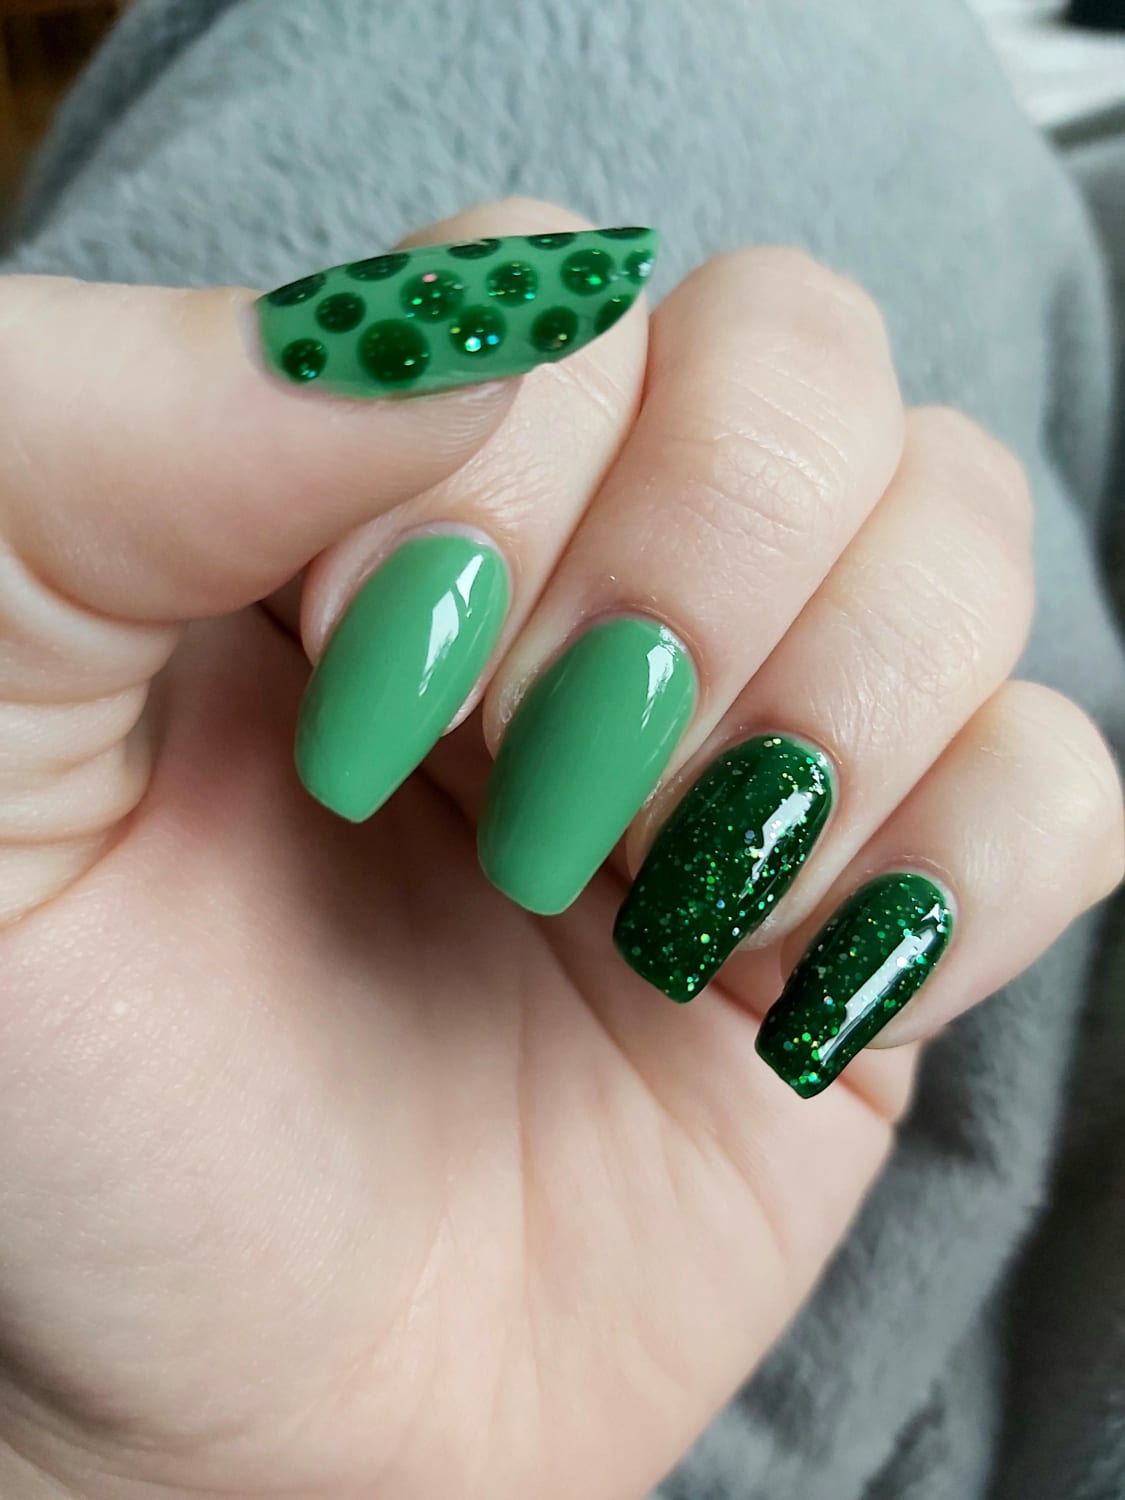 Green nail polish always puts me in a good mood